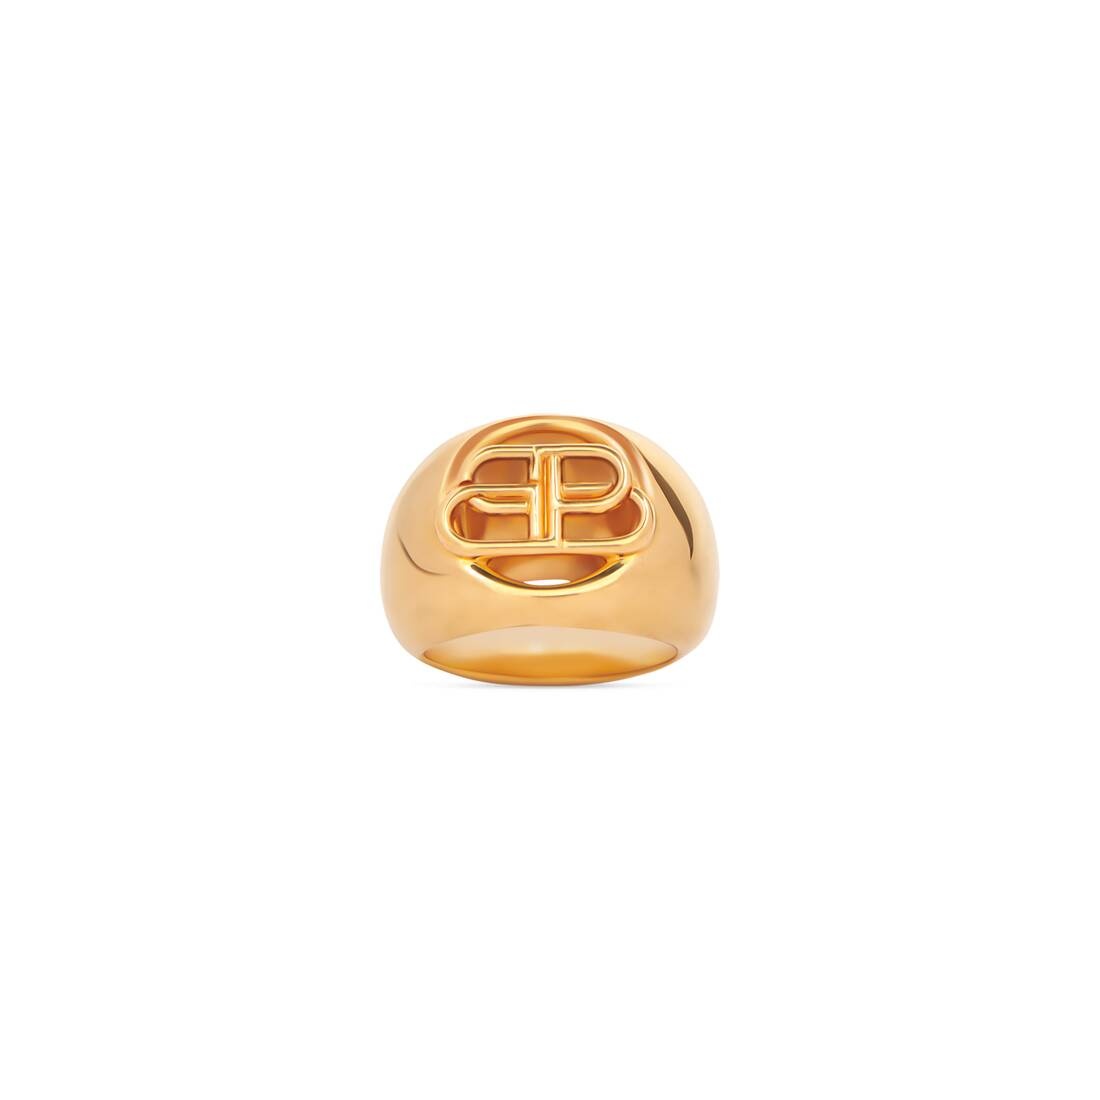 Bb Signet Ring in Gold - 1